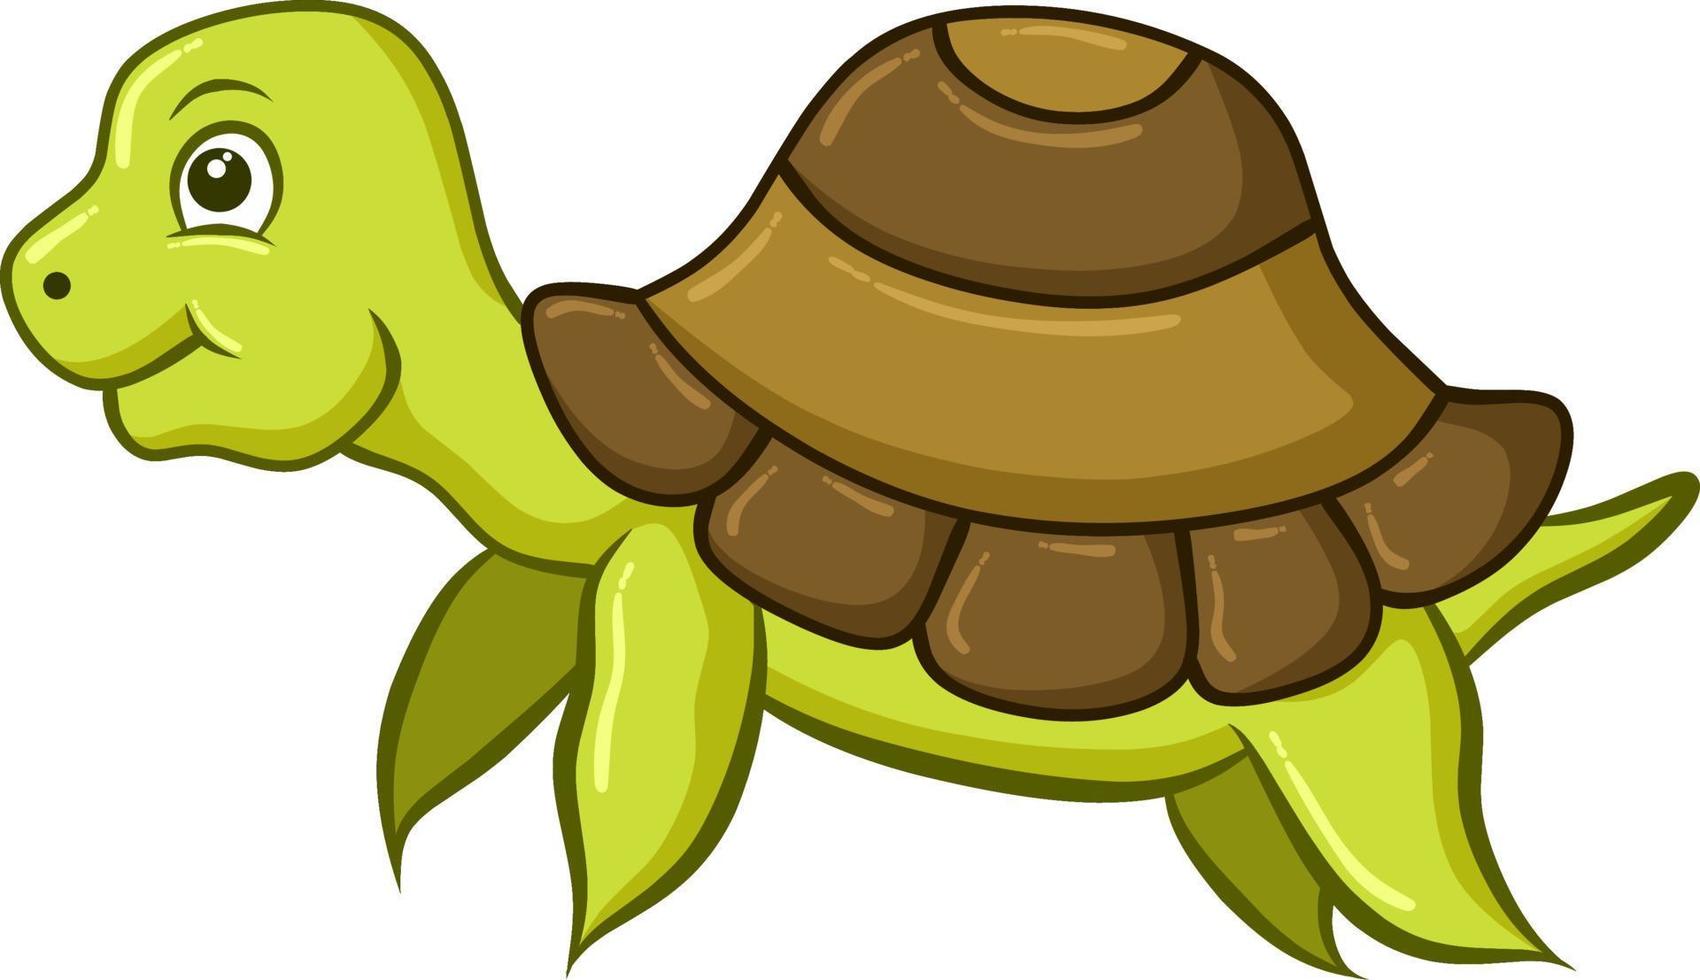 pequeño personaje de imagen aislada de tortuga marina vector